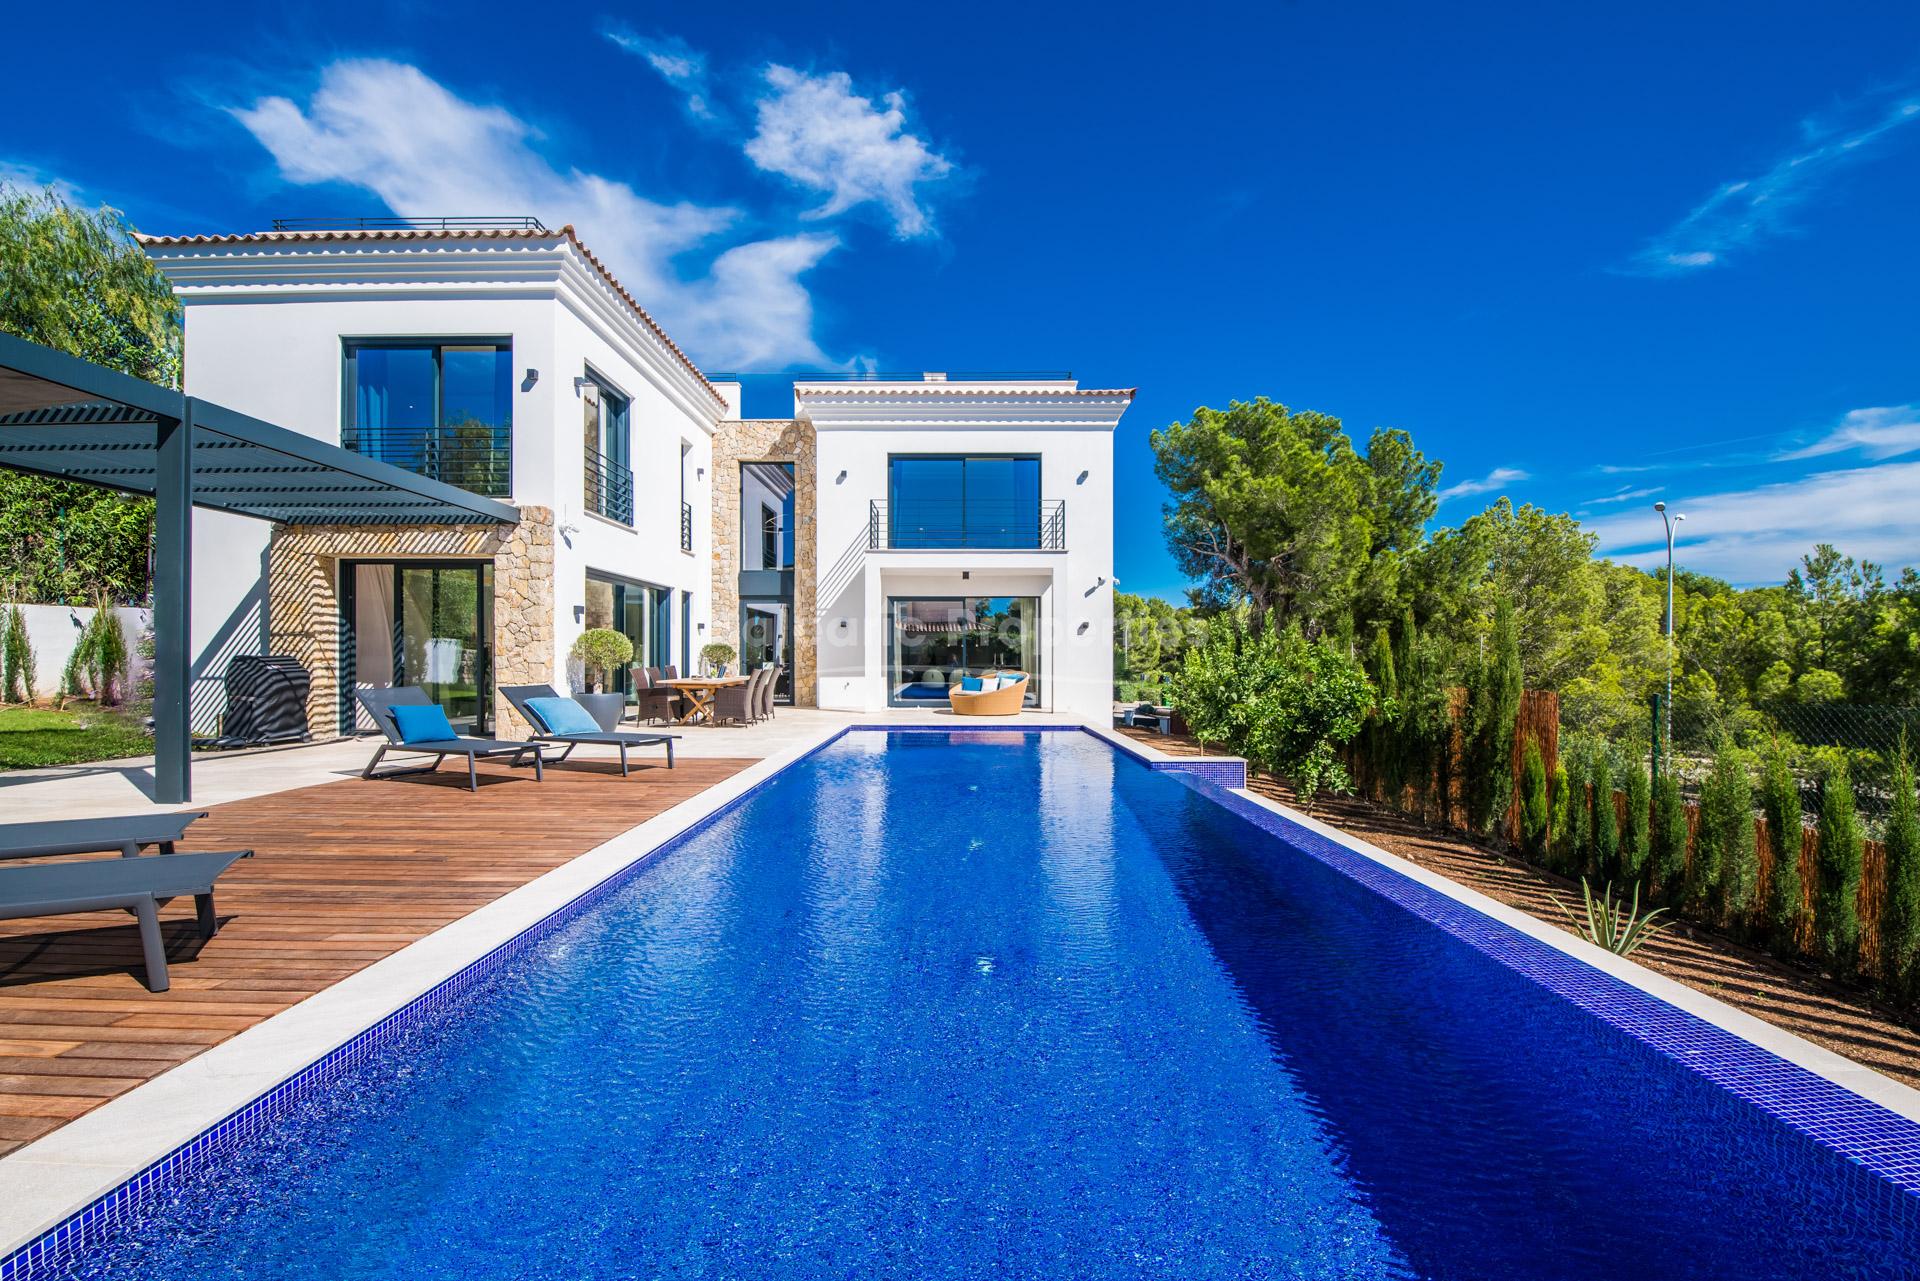 New villa with glorious views, for sale in Santa Ponsa, Mallorca